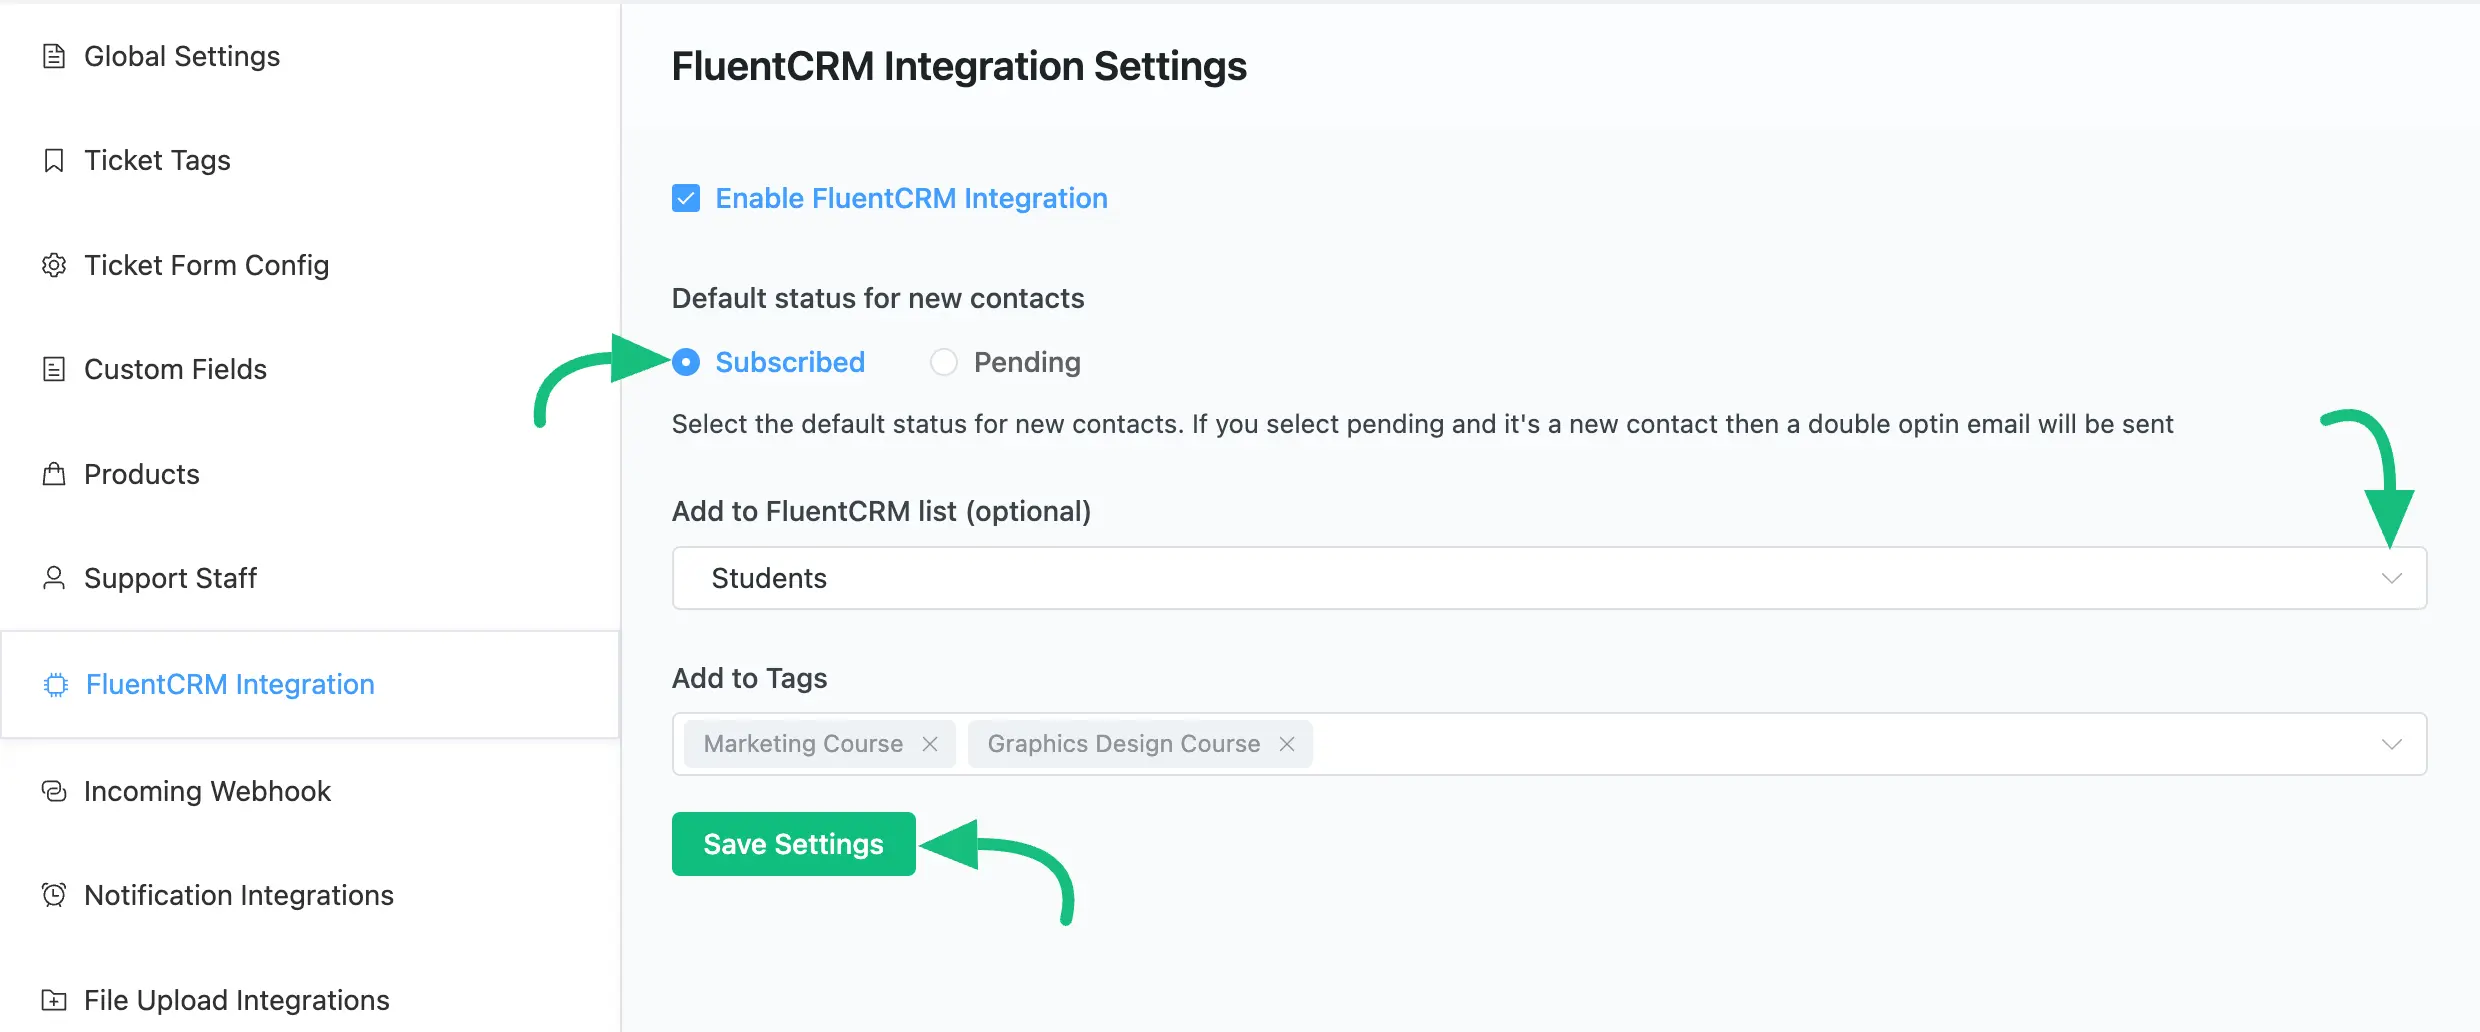 Fluent CRM Integration Settings options